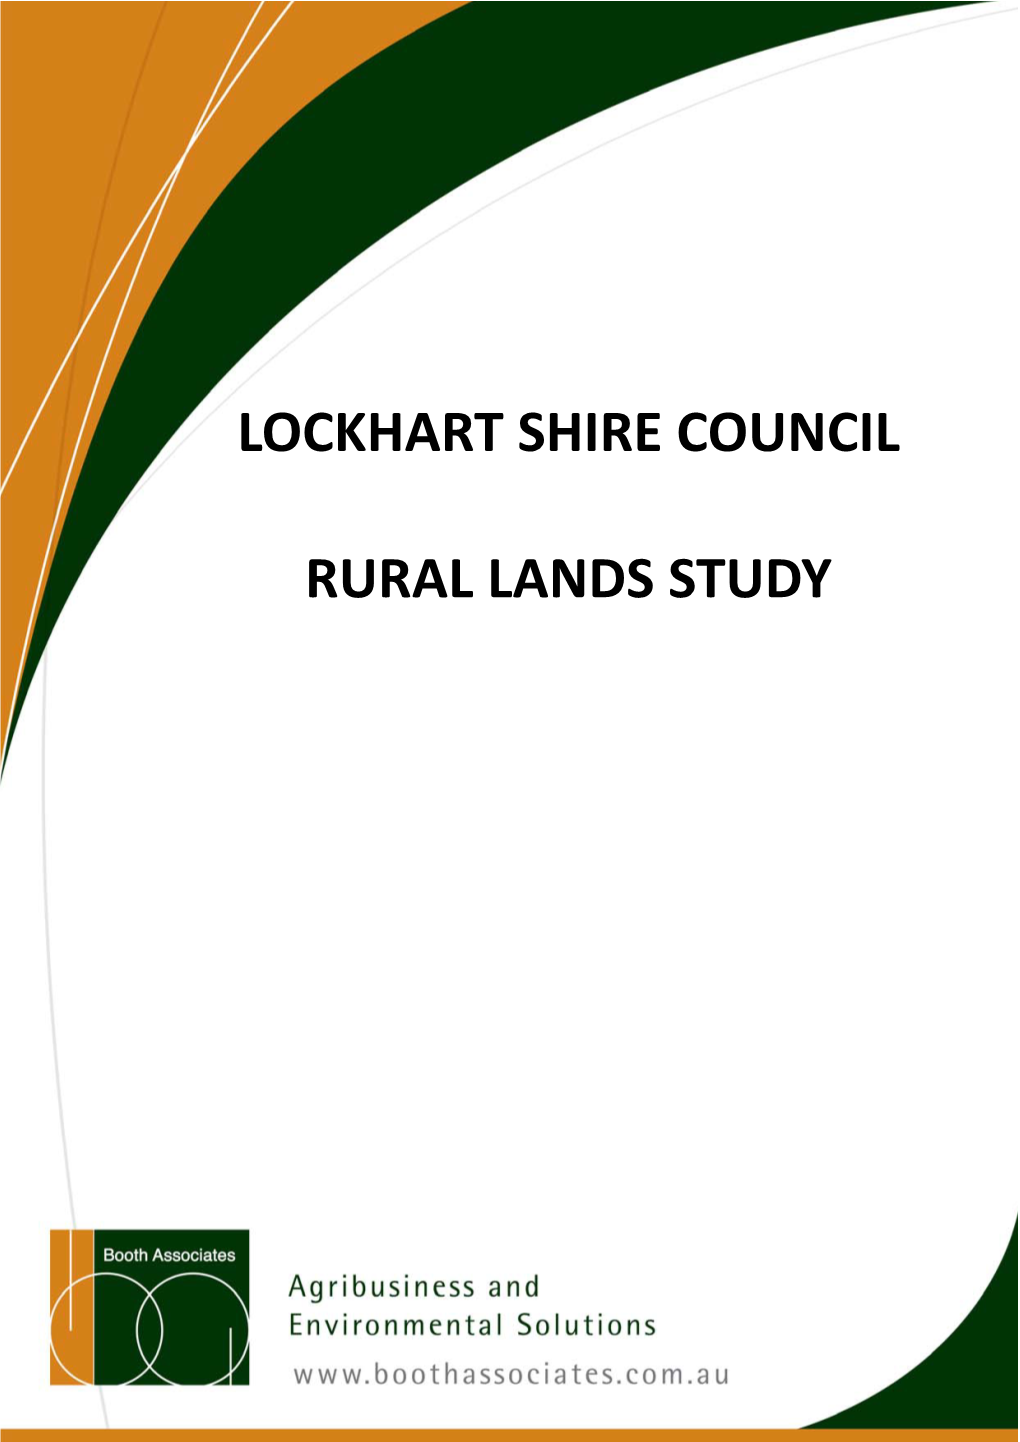 Lockhart Shire Council Rural Lands Study